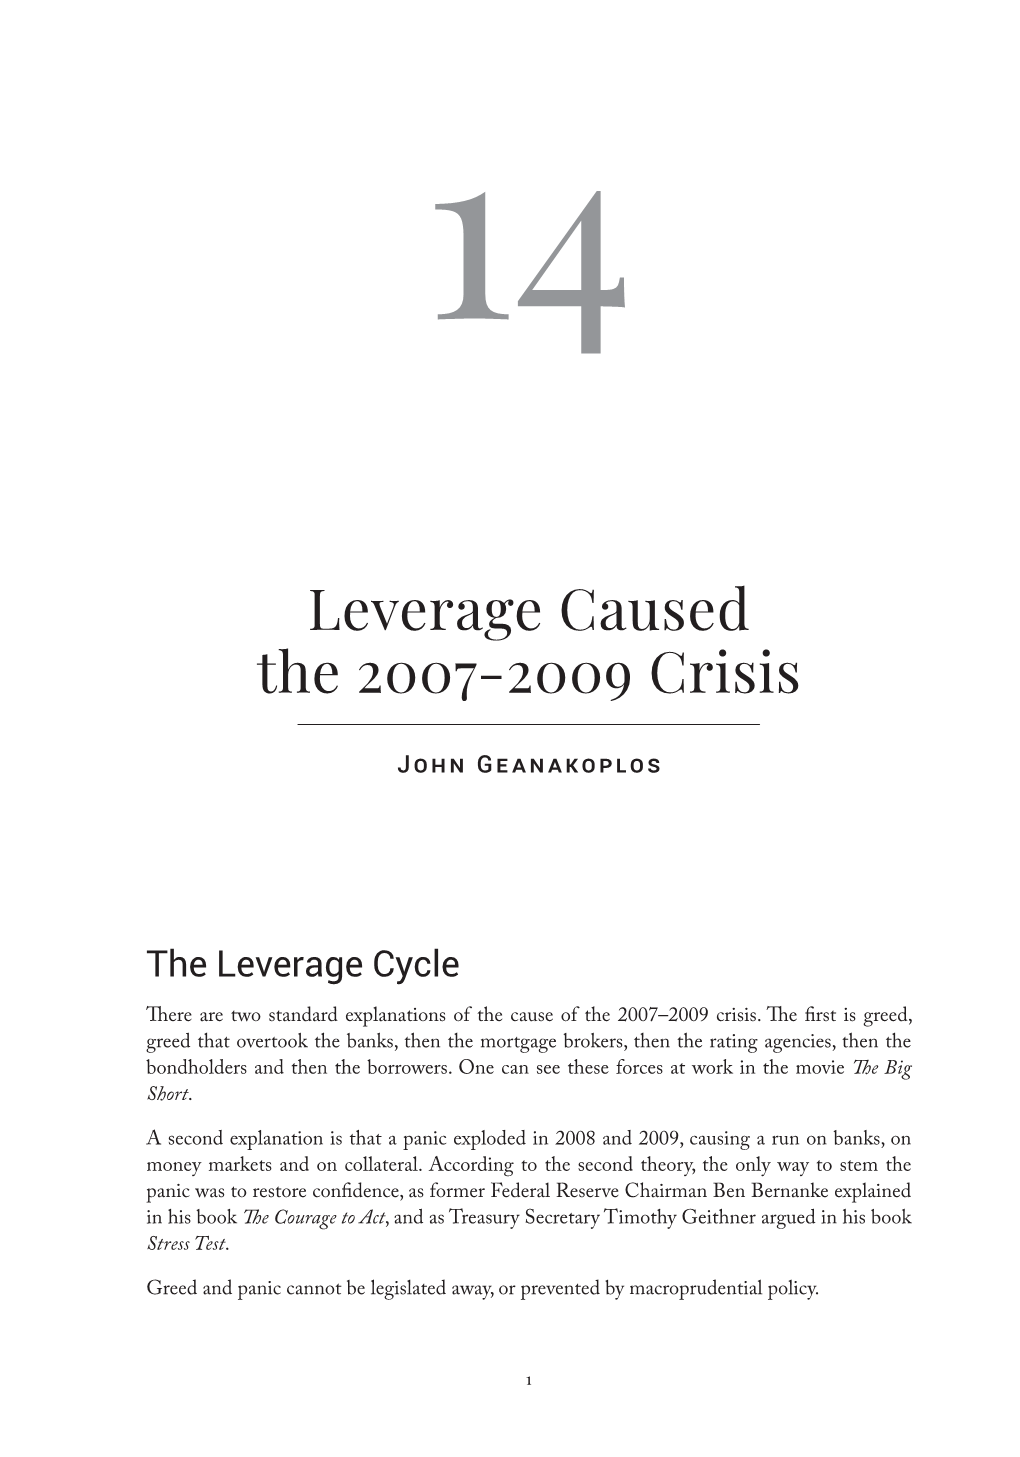 Leverage Caused the 2007-2009 Crisis